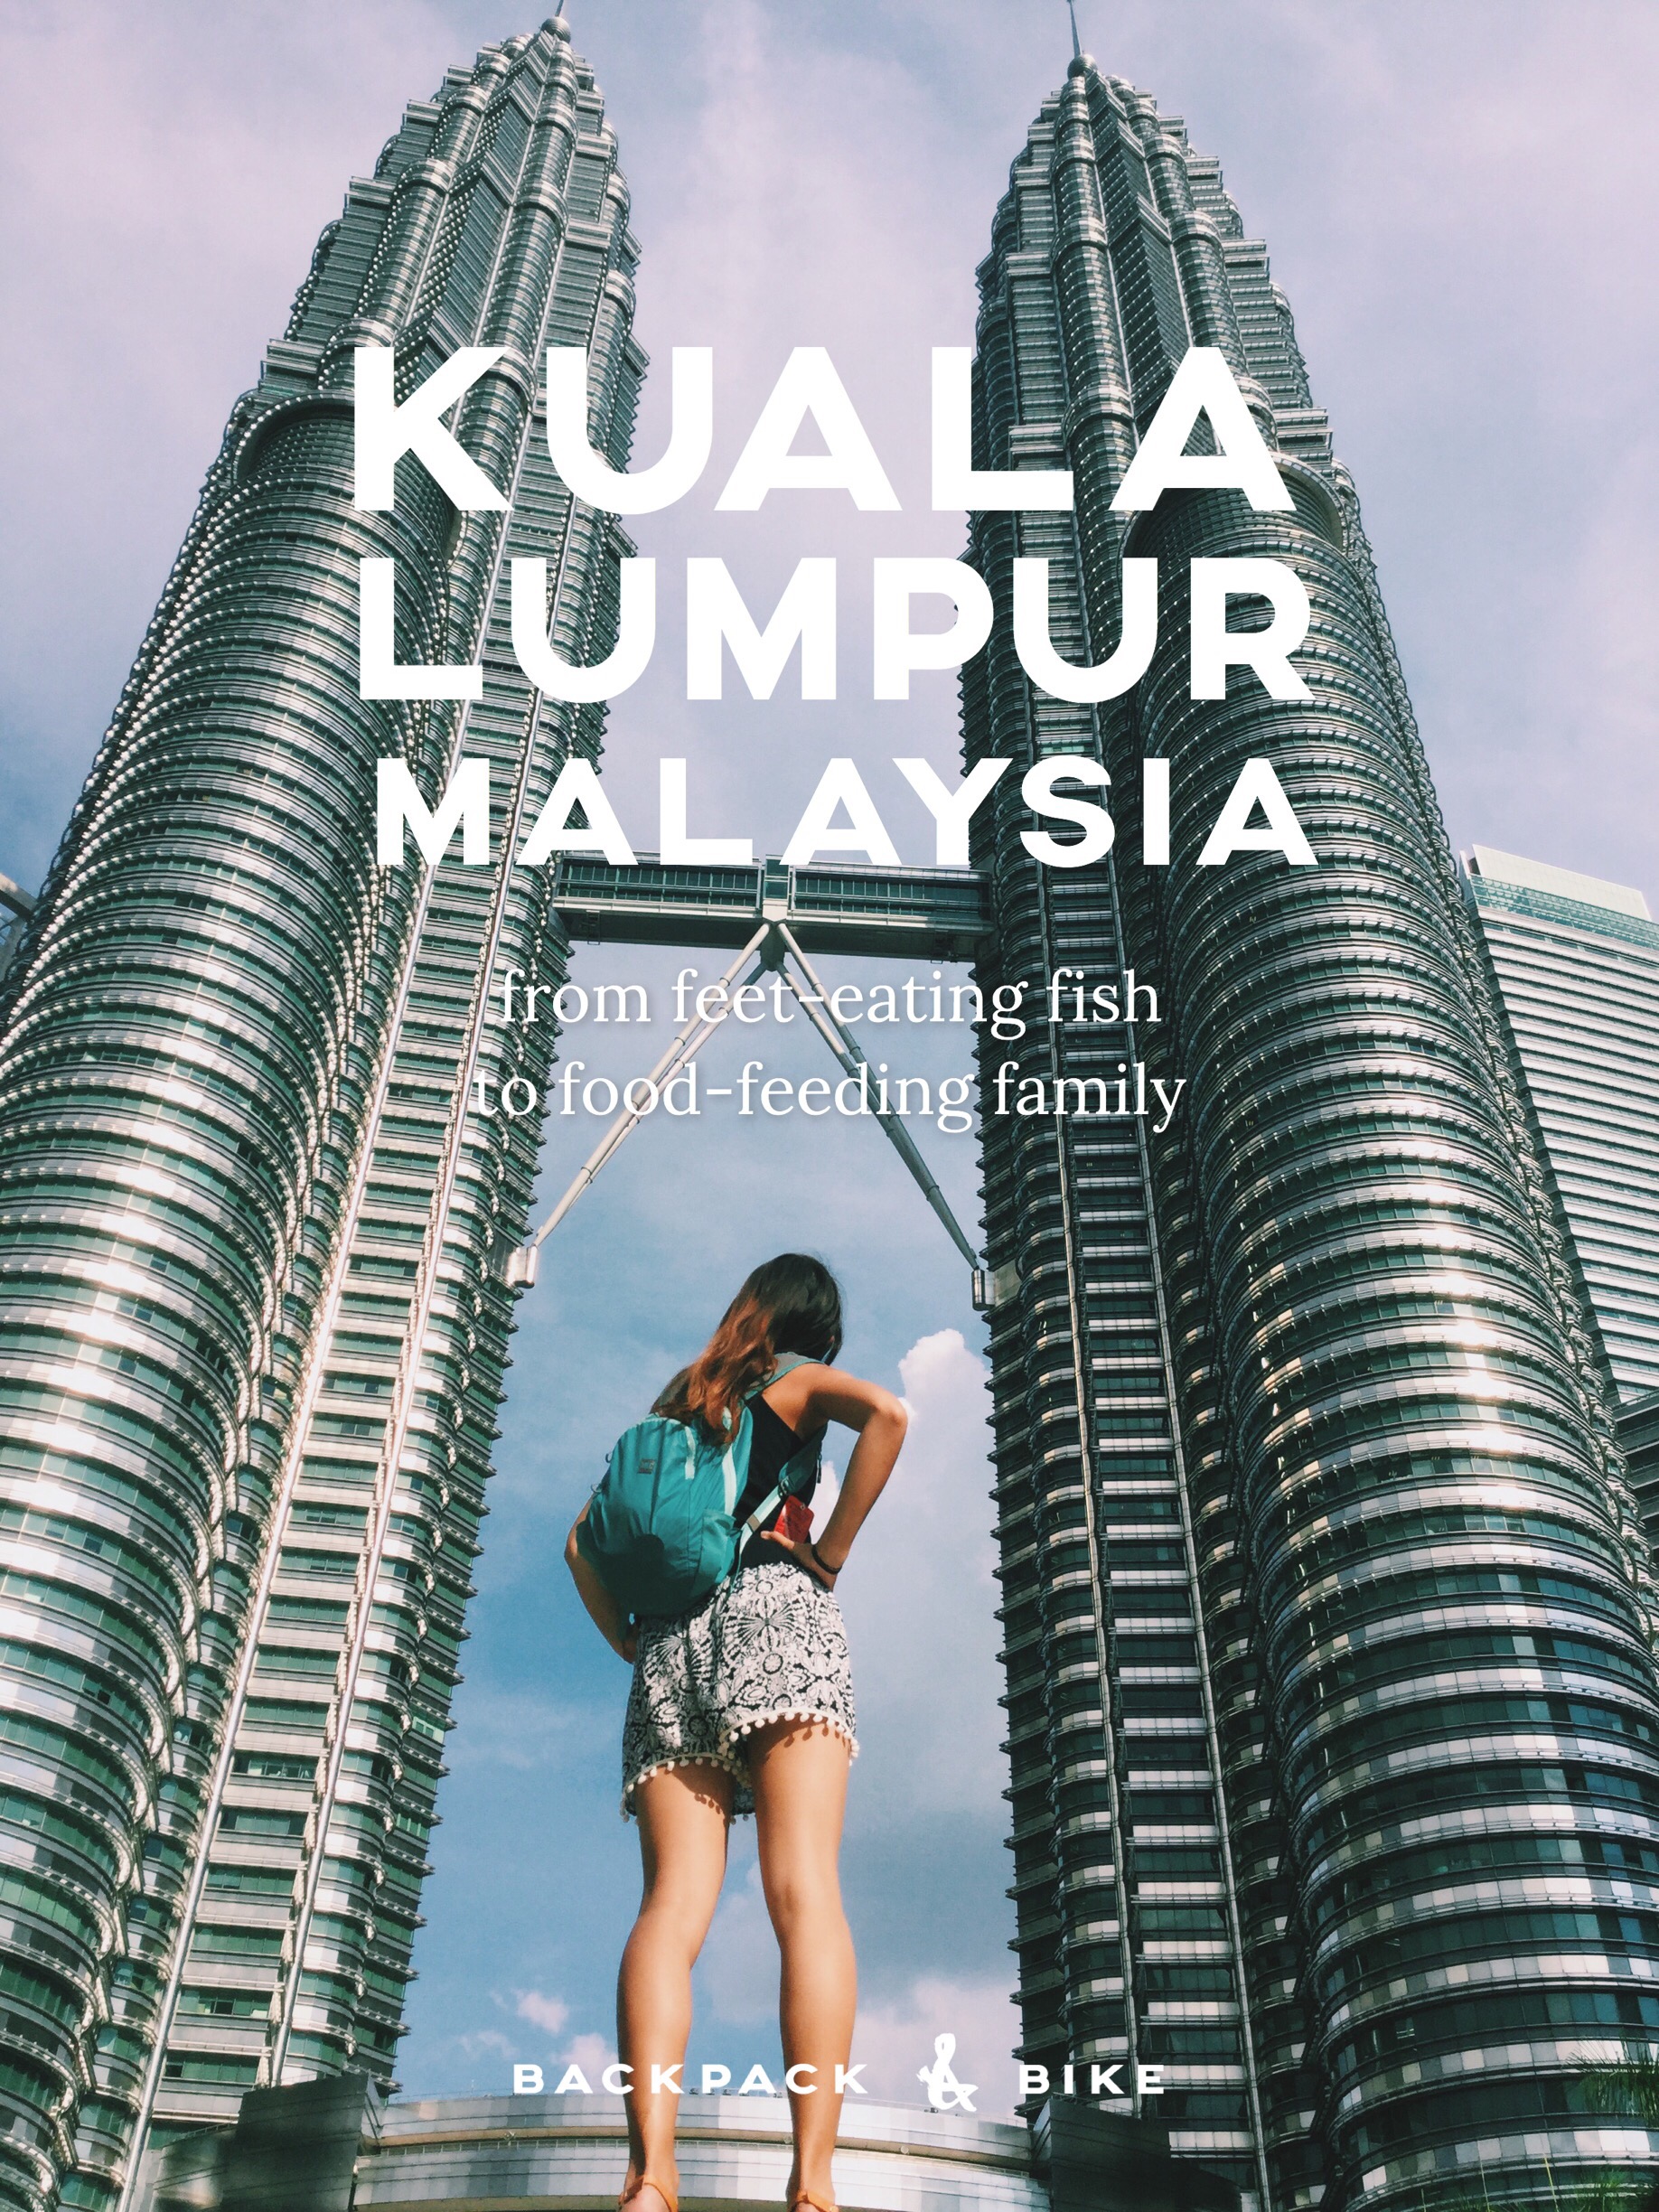 Kuala Lumpur, Malaysia | From feet-eating fish to food-feeding family